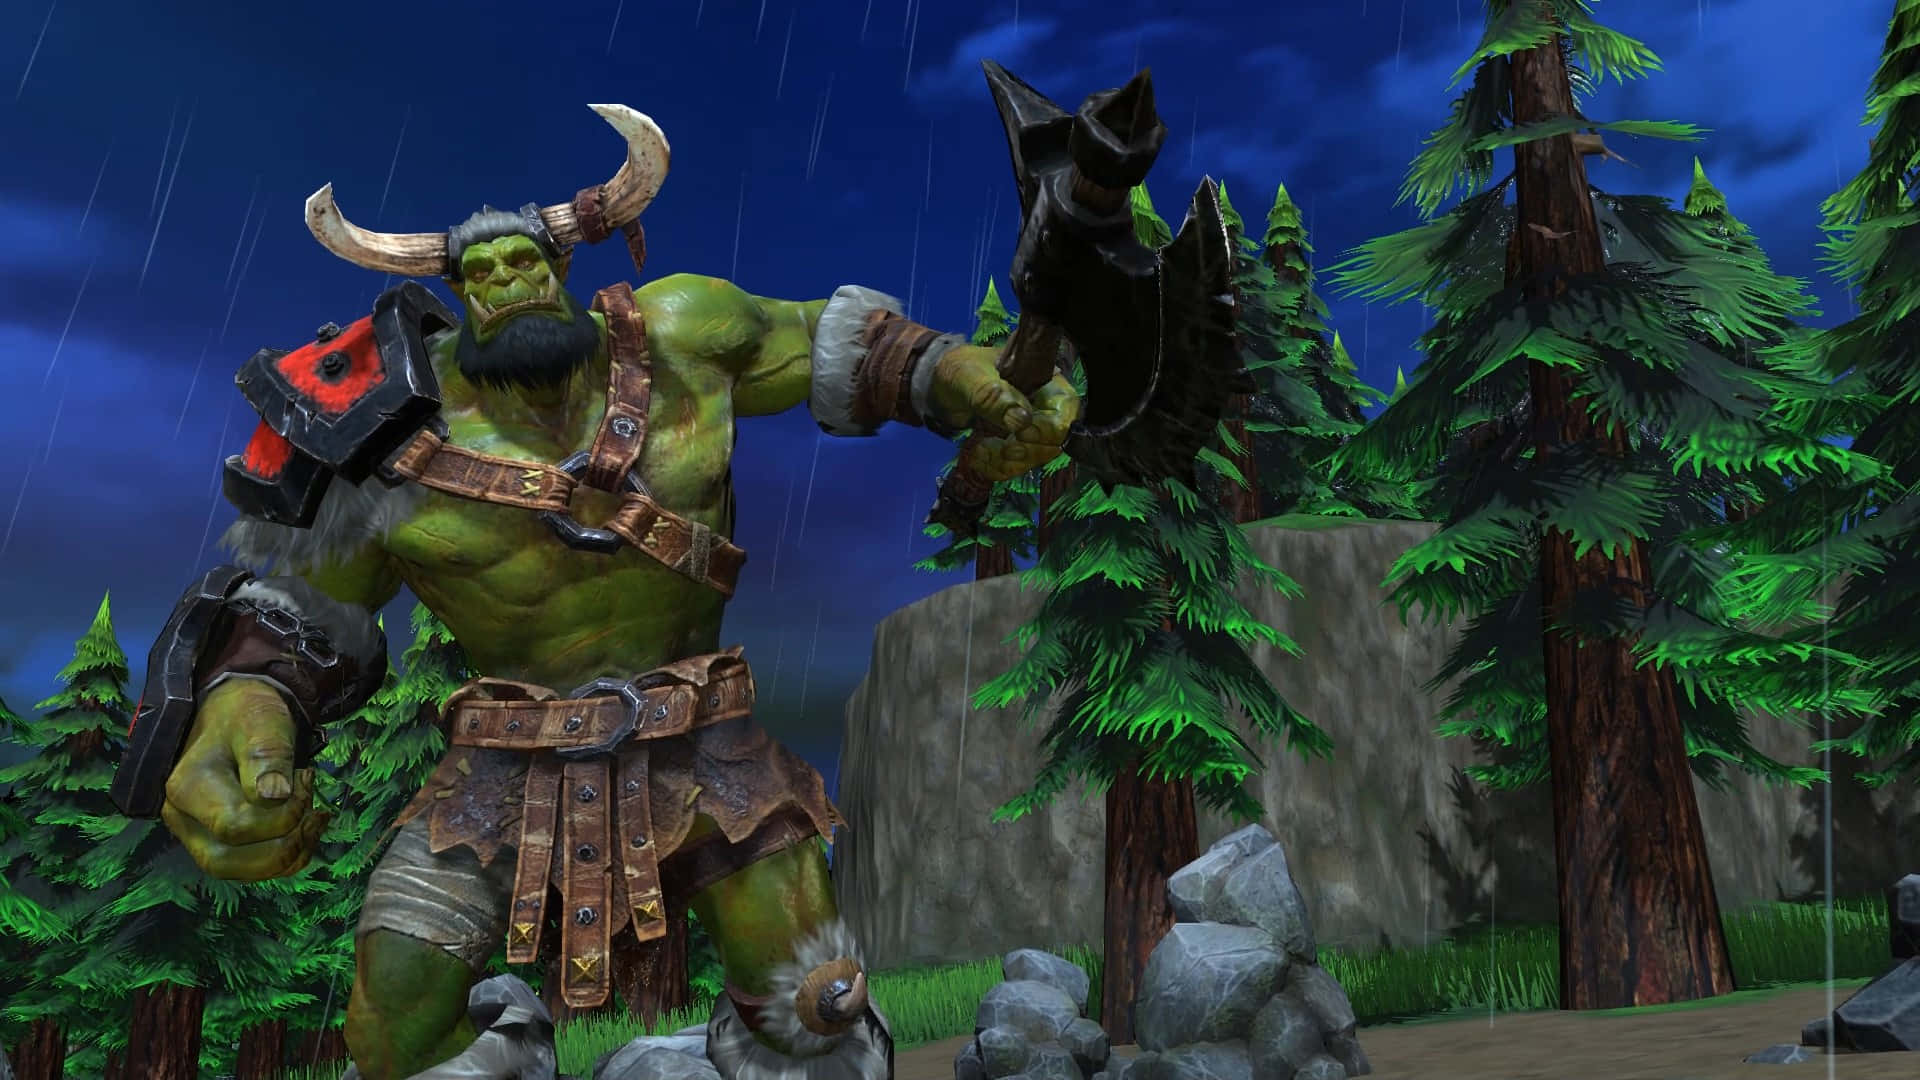 Warcraft2 Durotan-spel - Dator- Eller Mobilbakgrundsbild. Wallpaper